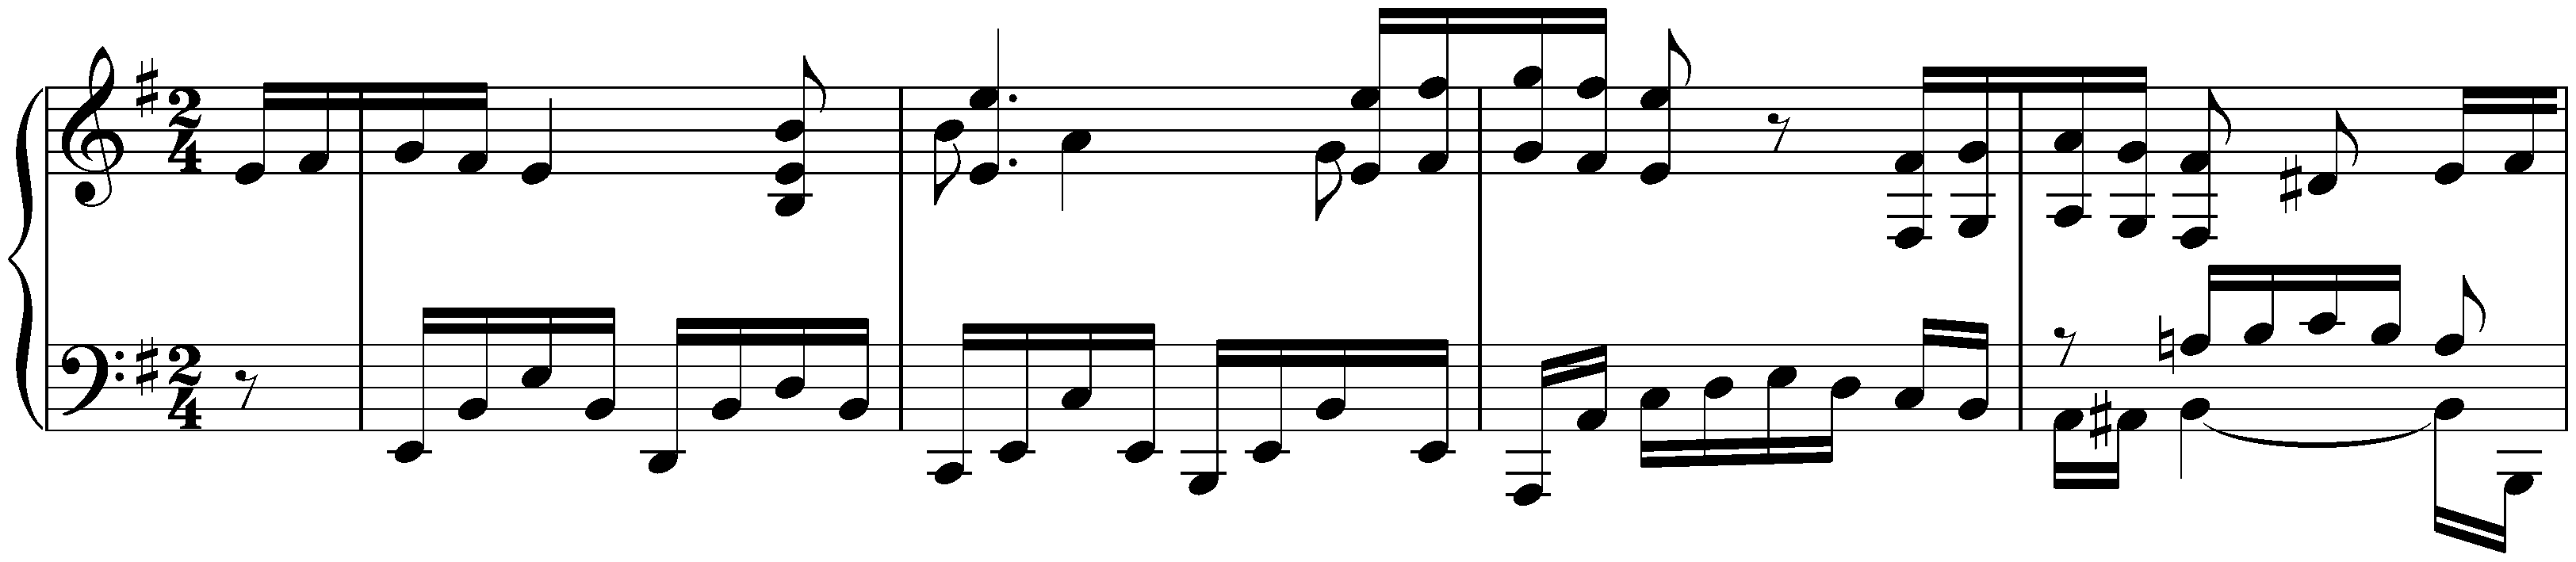 Kurze Stücke; 15. E minor